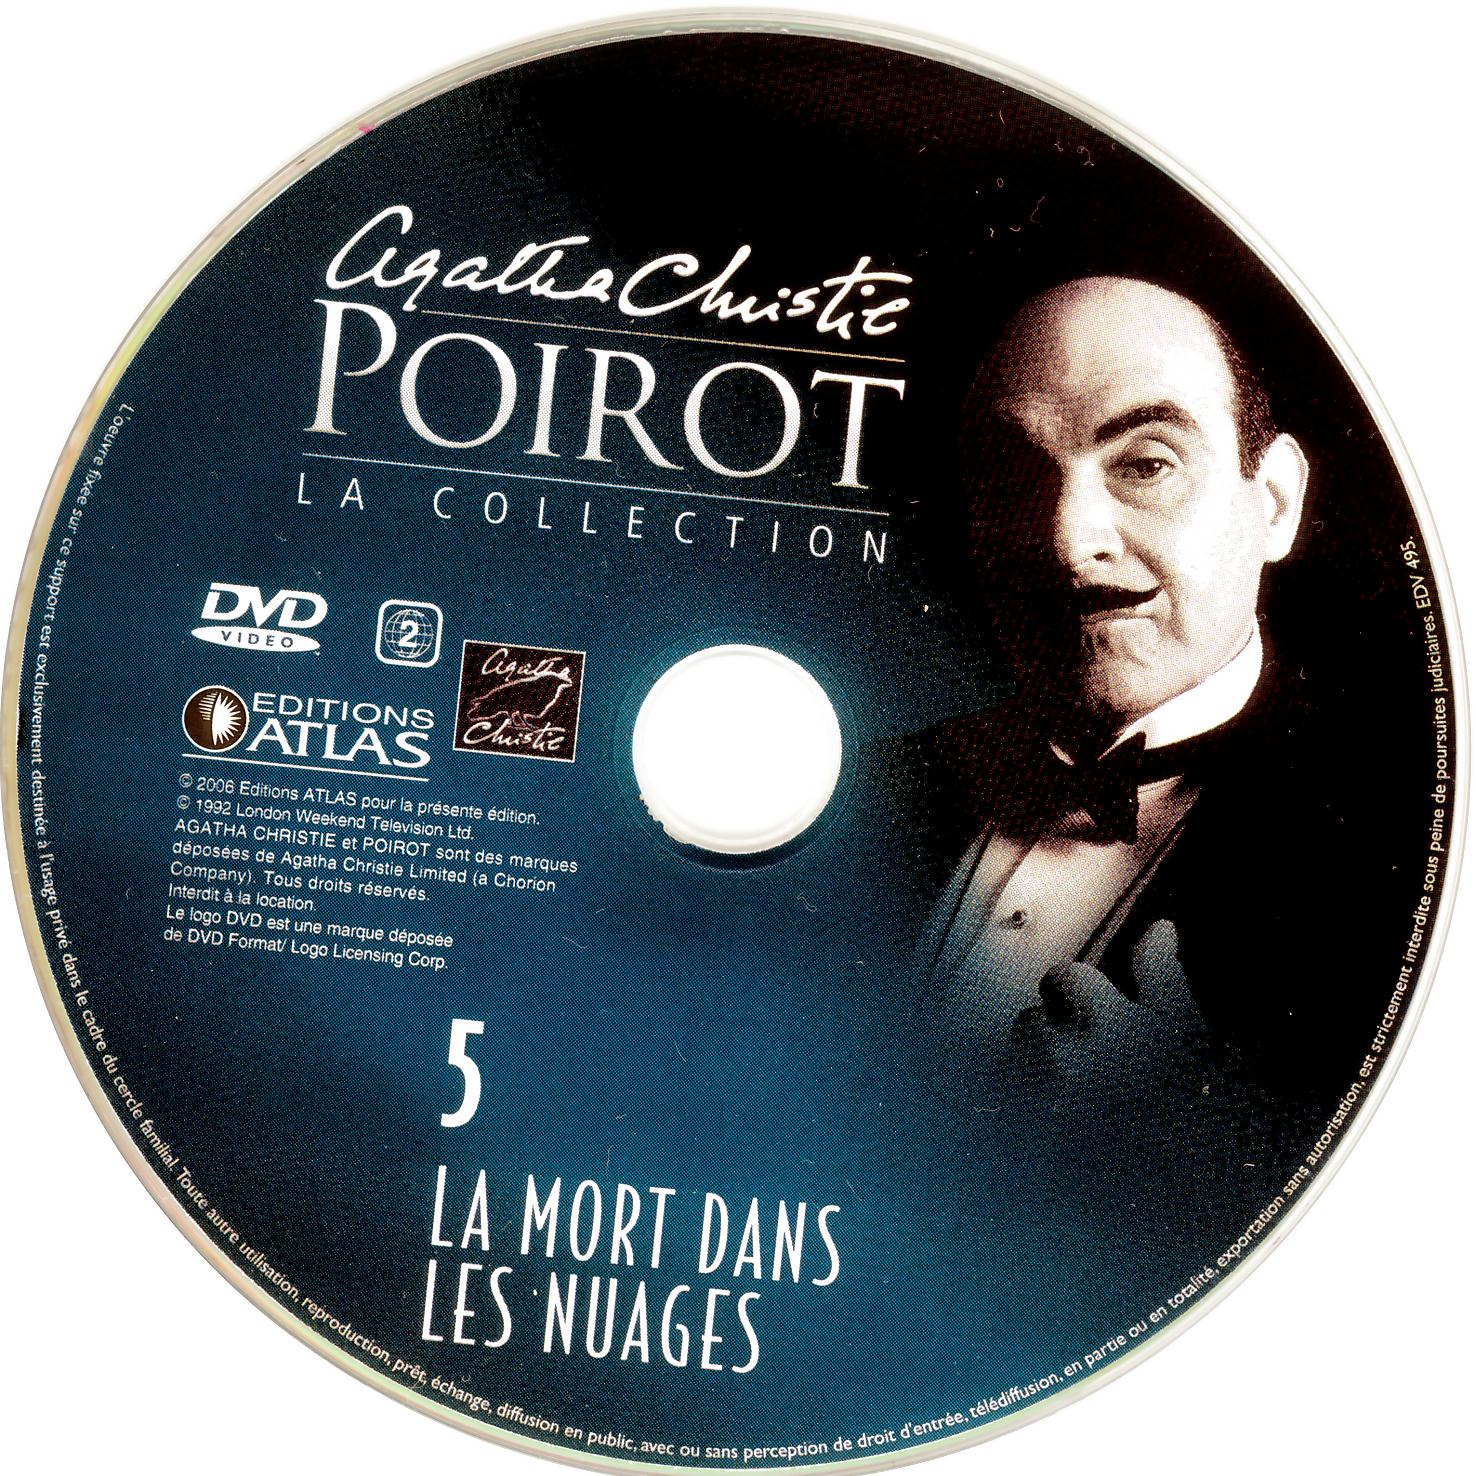 Hercule Poirot vol 5